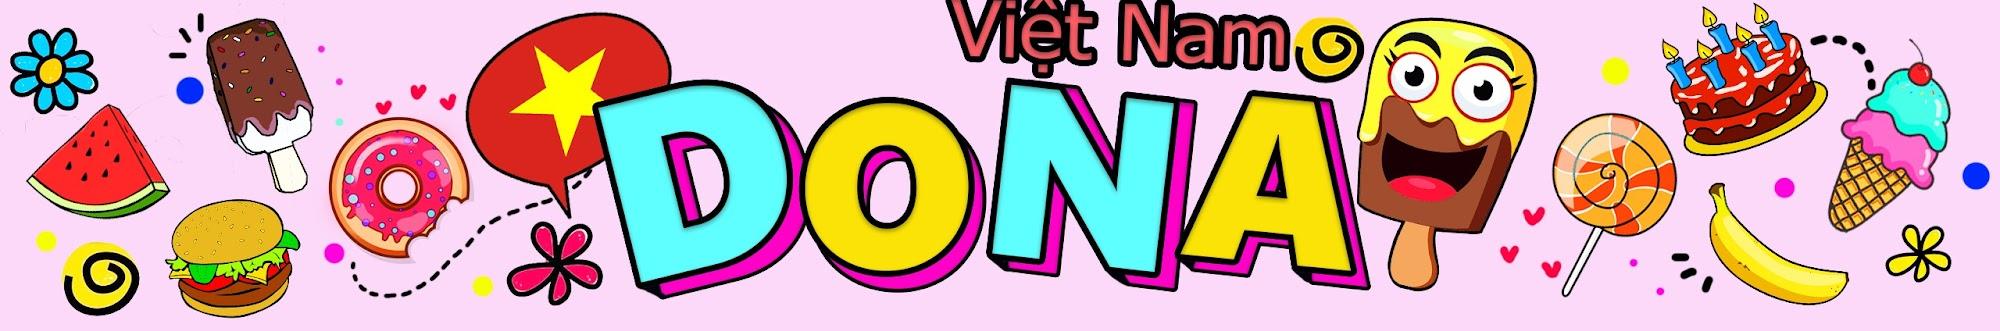 DONA Việt Nam